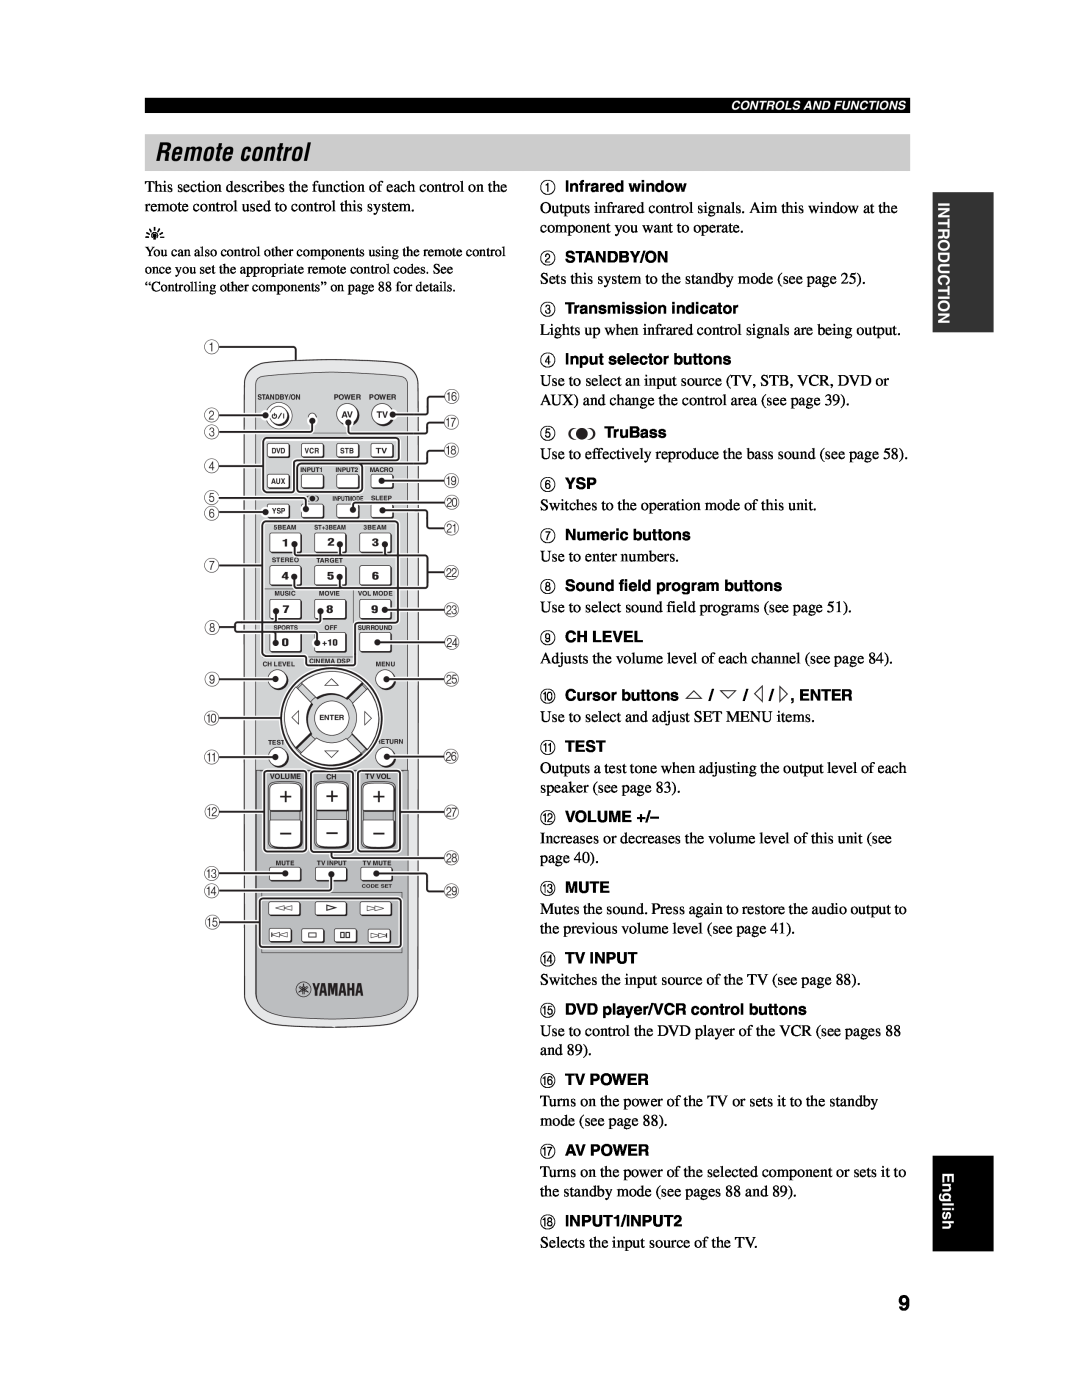 Yamaha YSP-1000 owner manual Remote control 